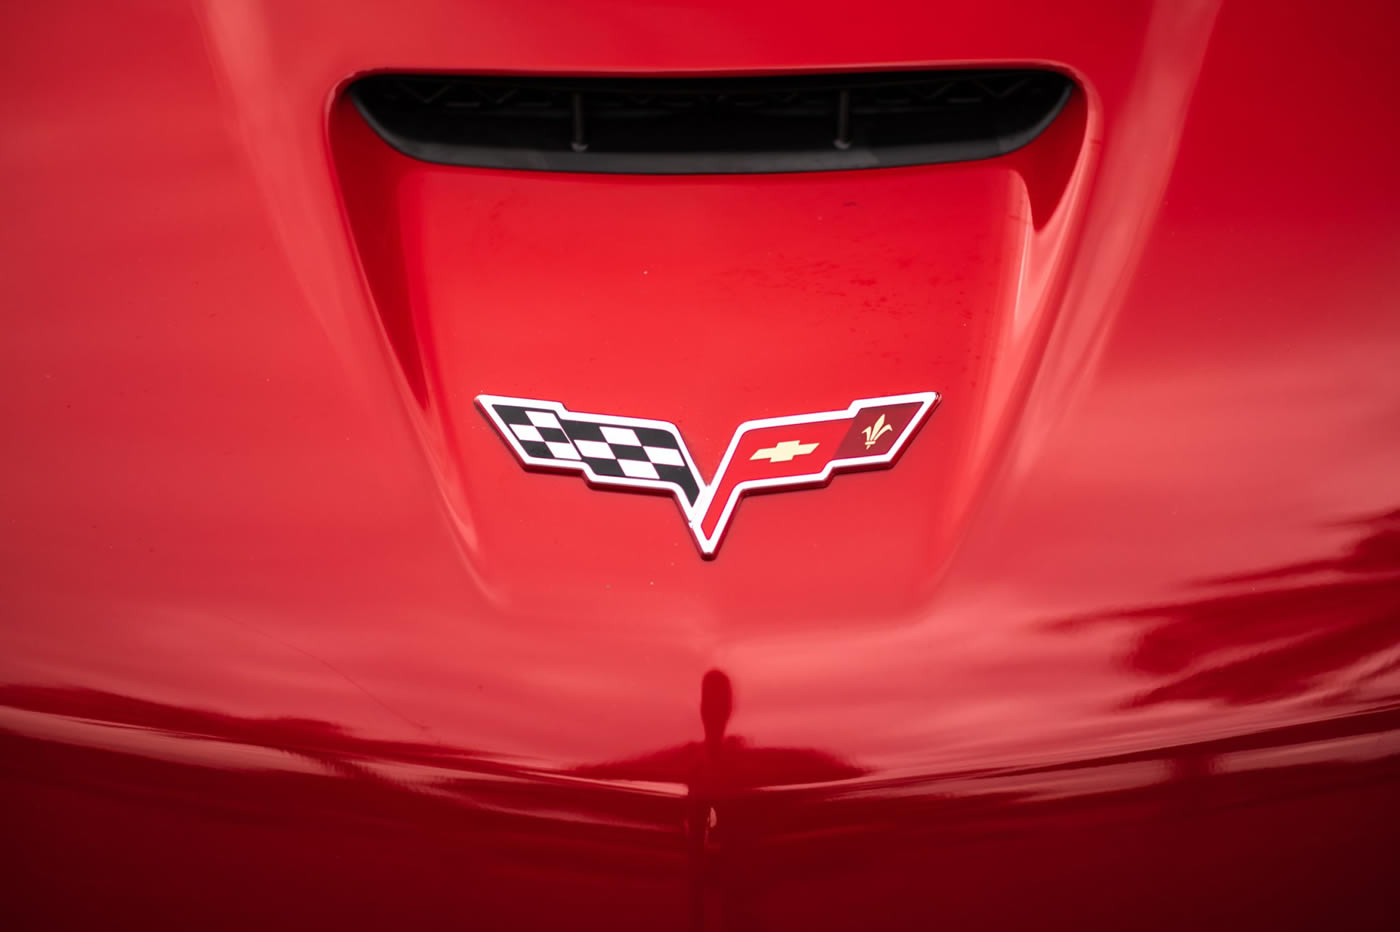 2009 Corvette ZR1 in Victory Red